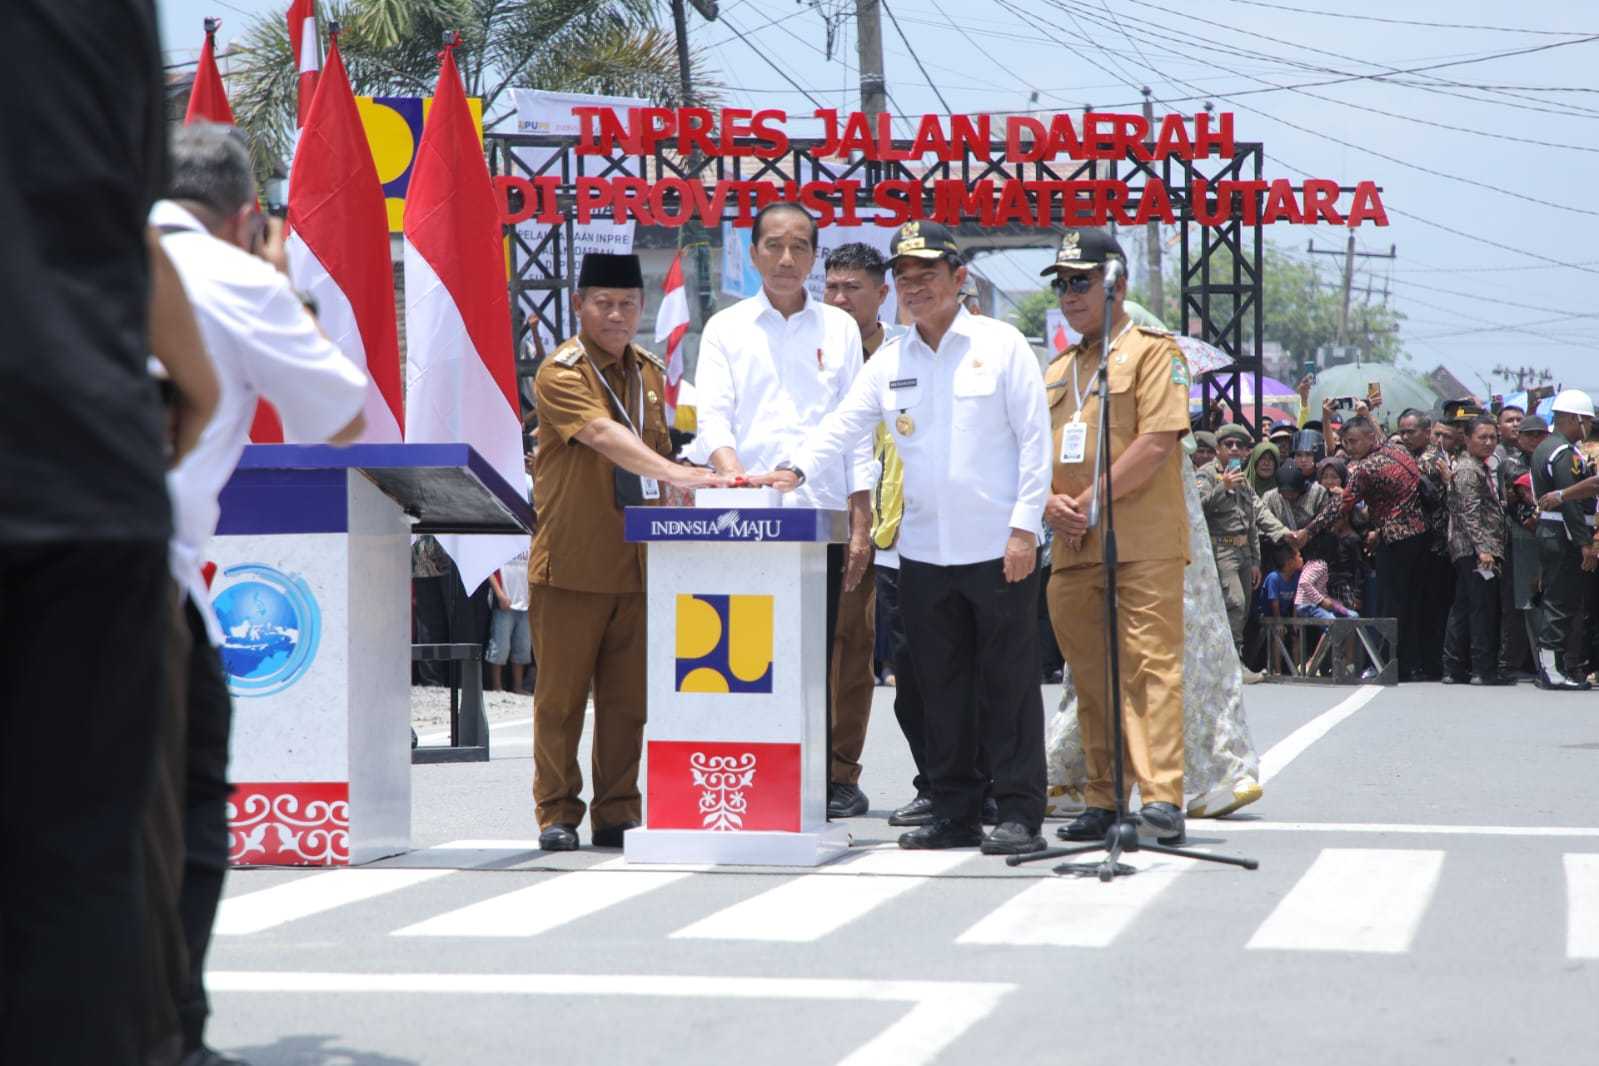 Bupati Asahan Dampingi Presiden Jokowi Resmian Jalan Inpres